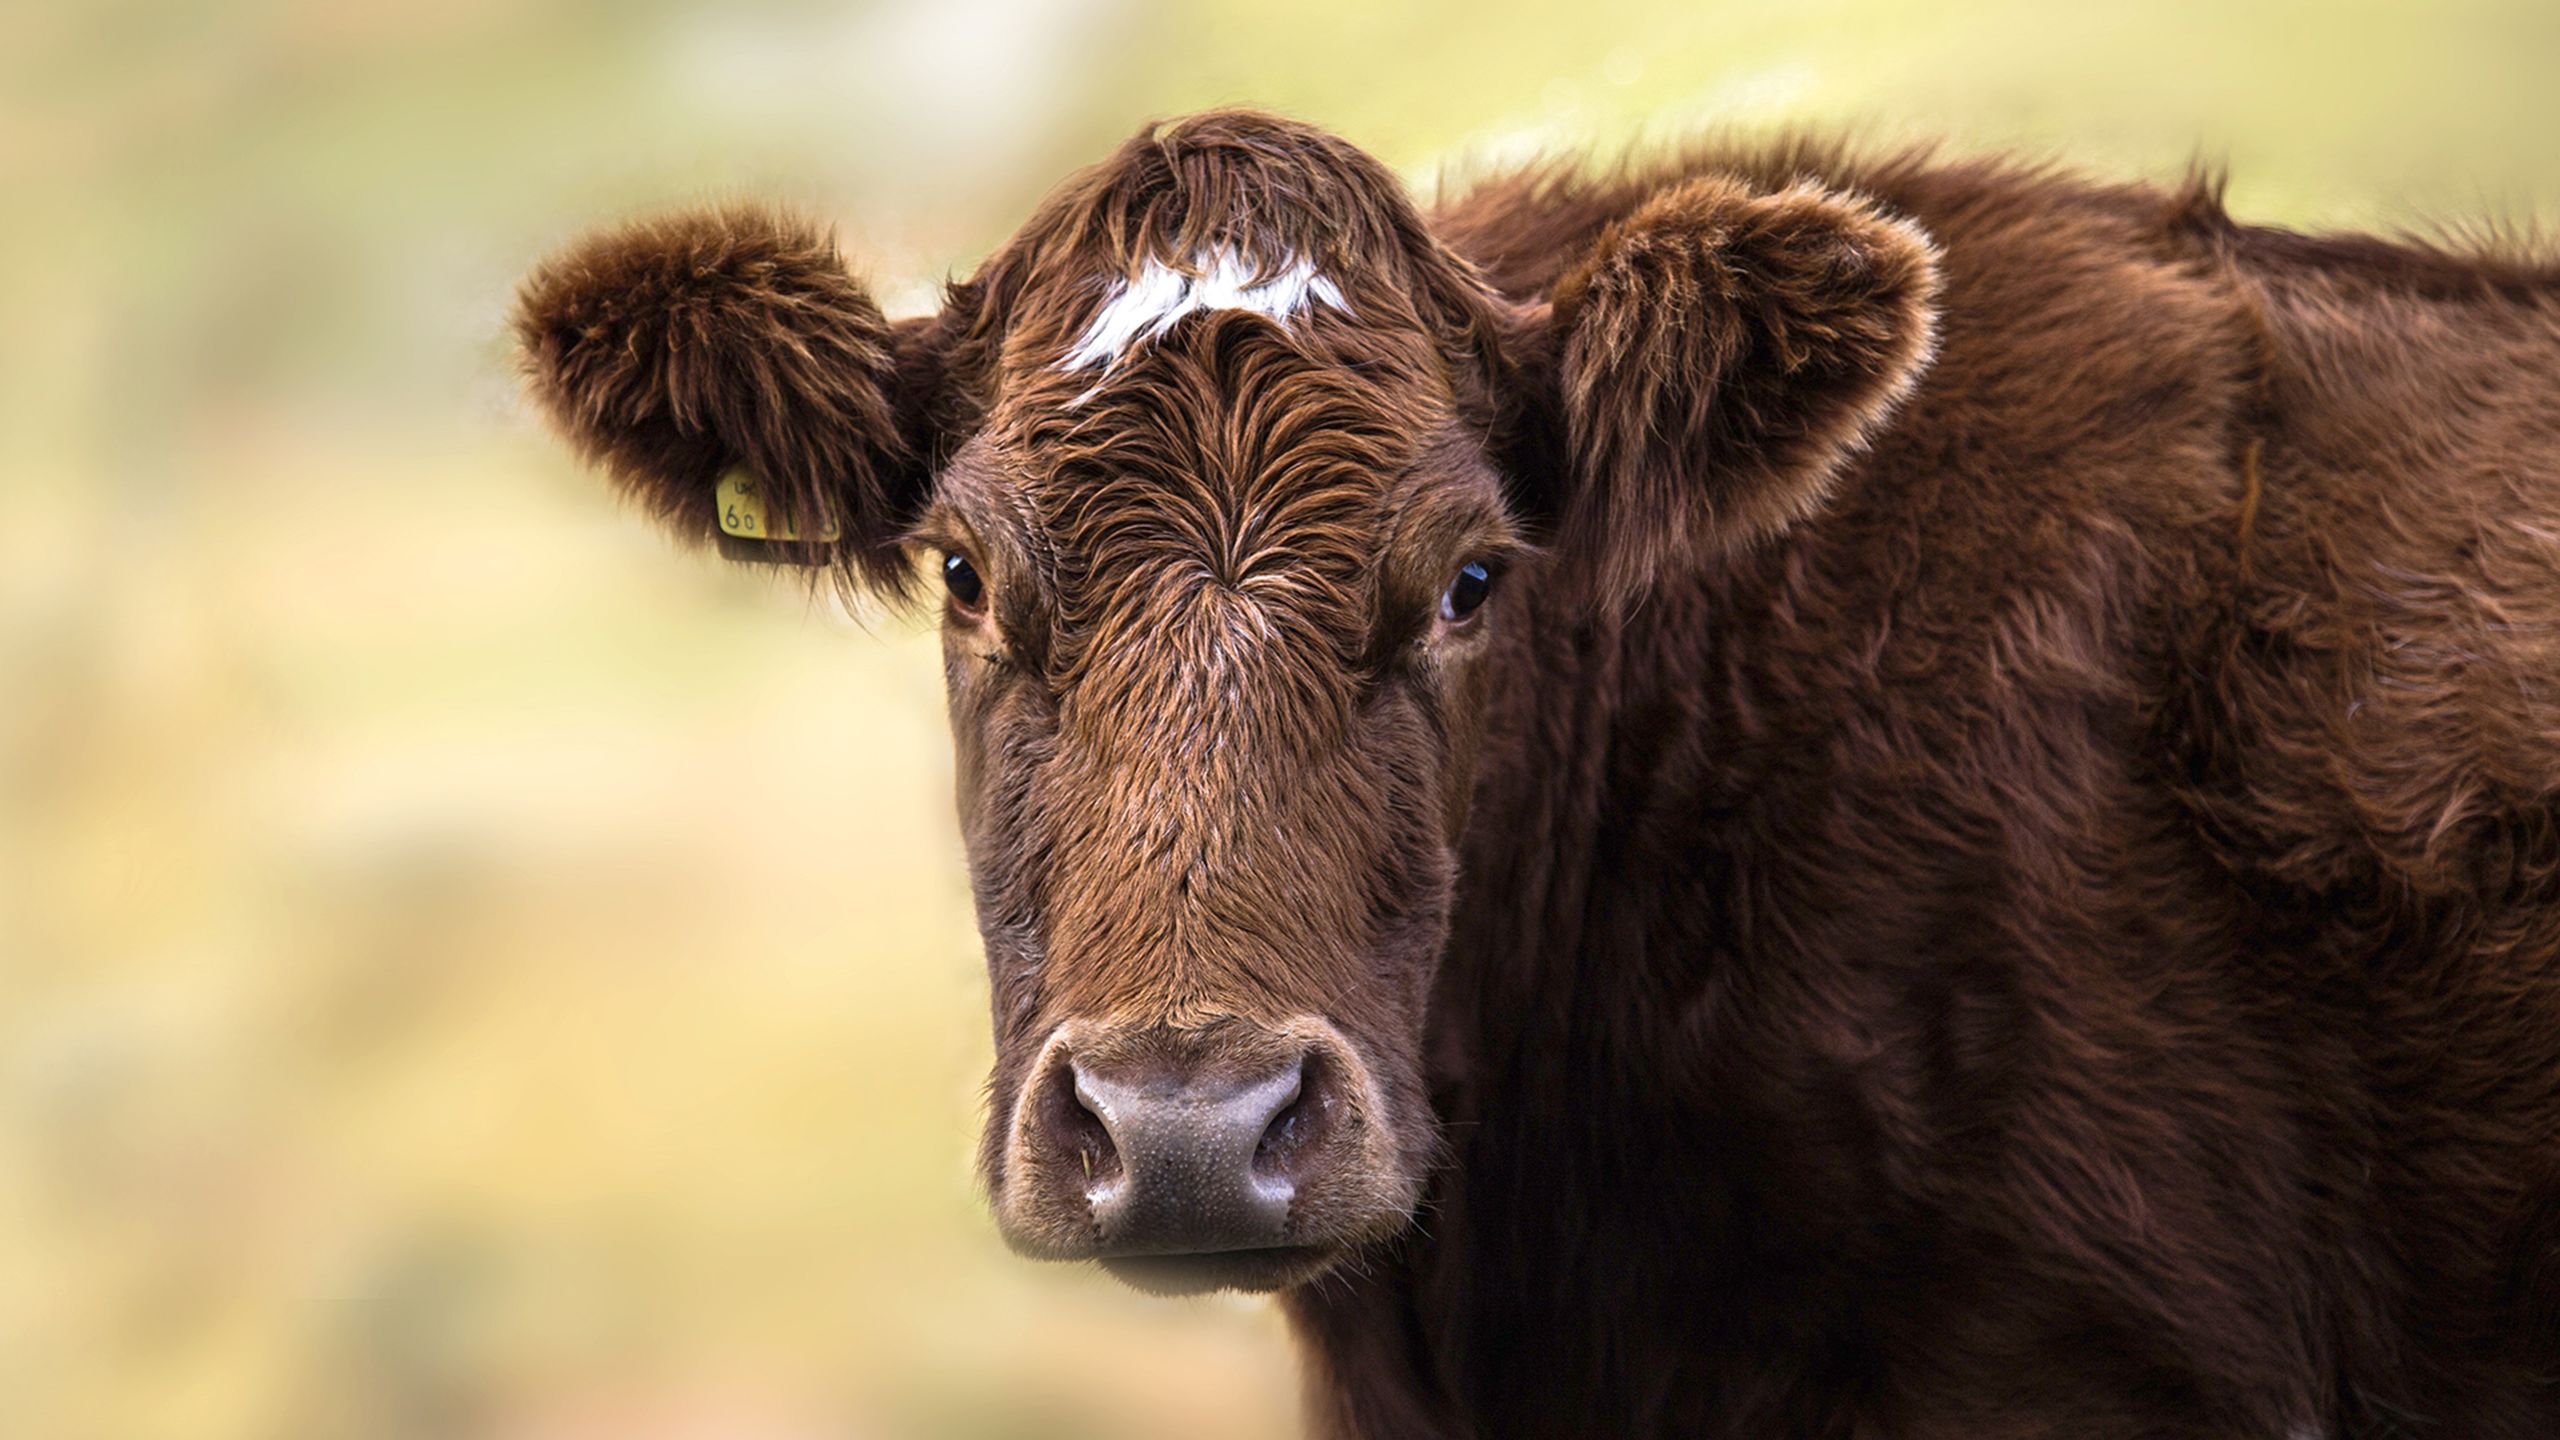 Cow on moor by Milada Vigerova on Pixabay